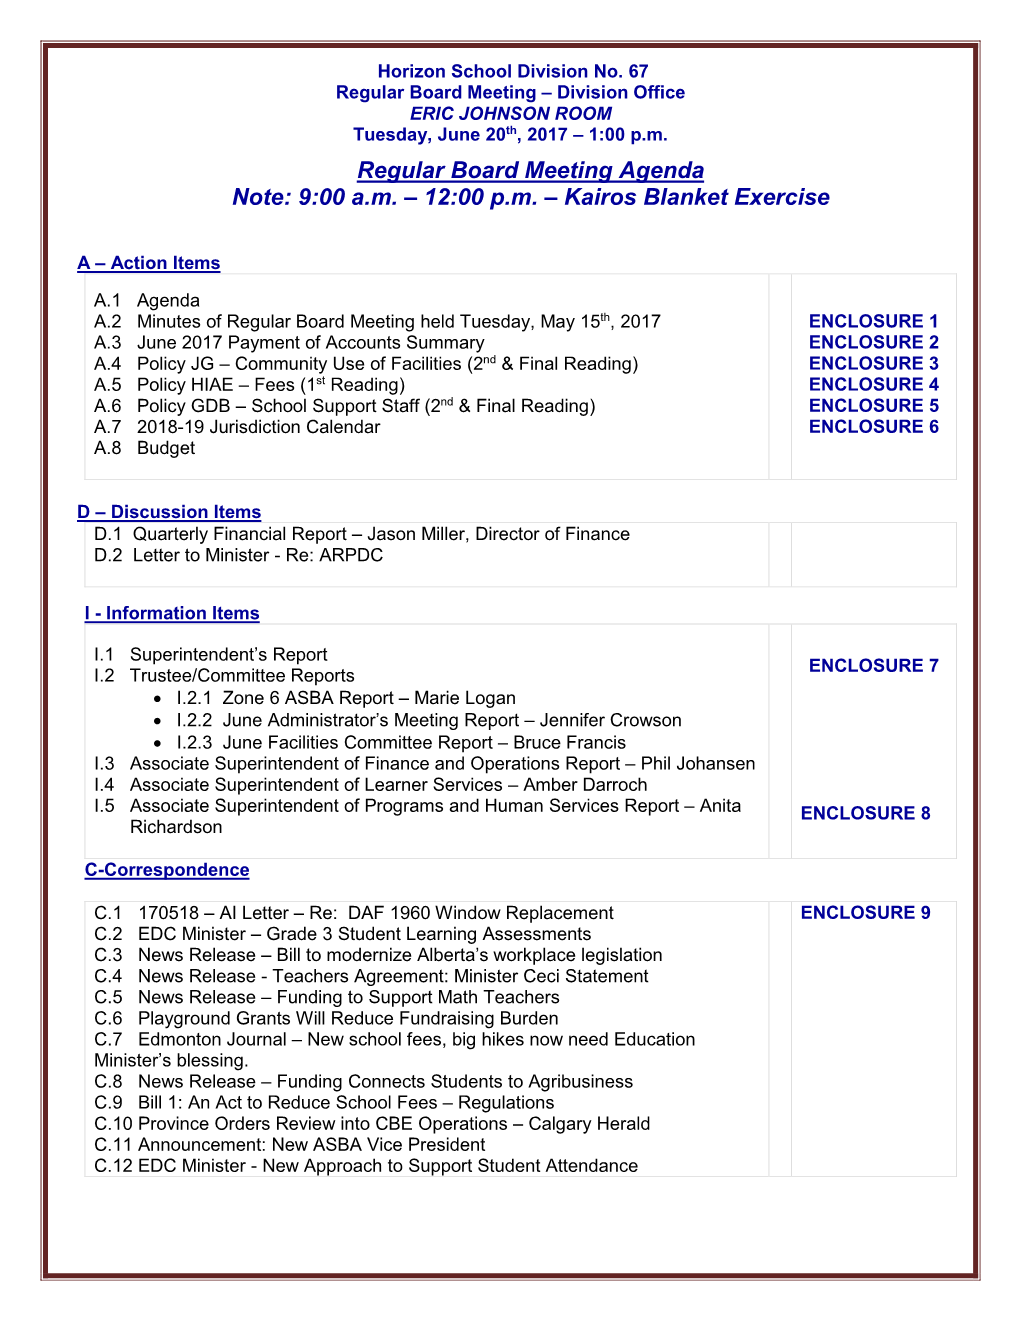 Regular Board Meeting Agenda Note: 9:00 Am – 12:00 Pm – Kairos